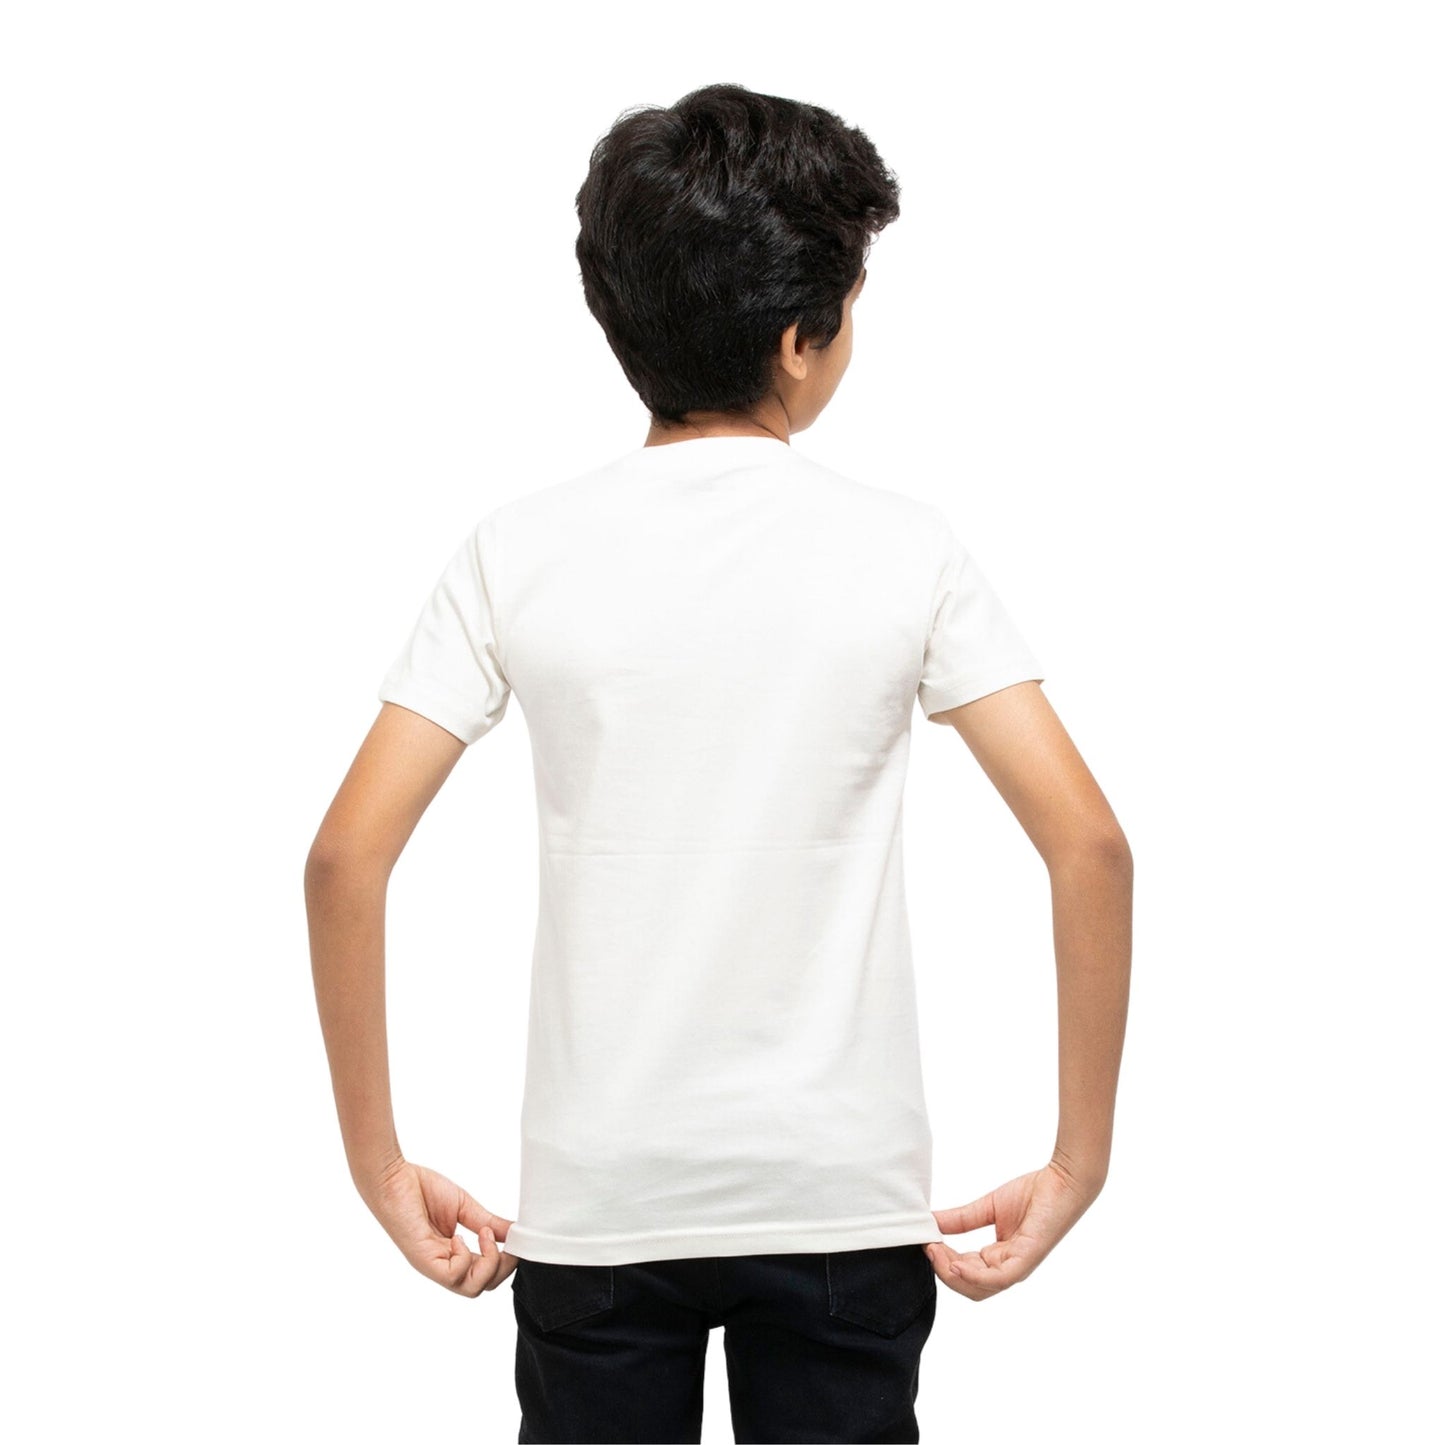 Start Music Print Boys Cotton T-Shirt (Cream)